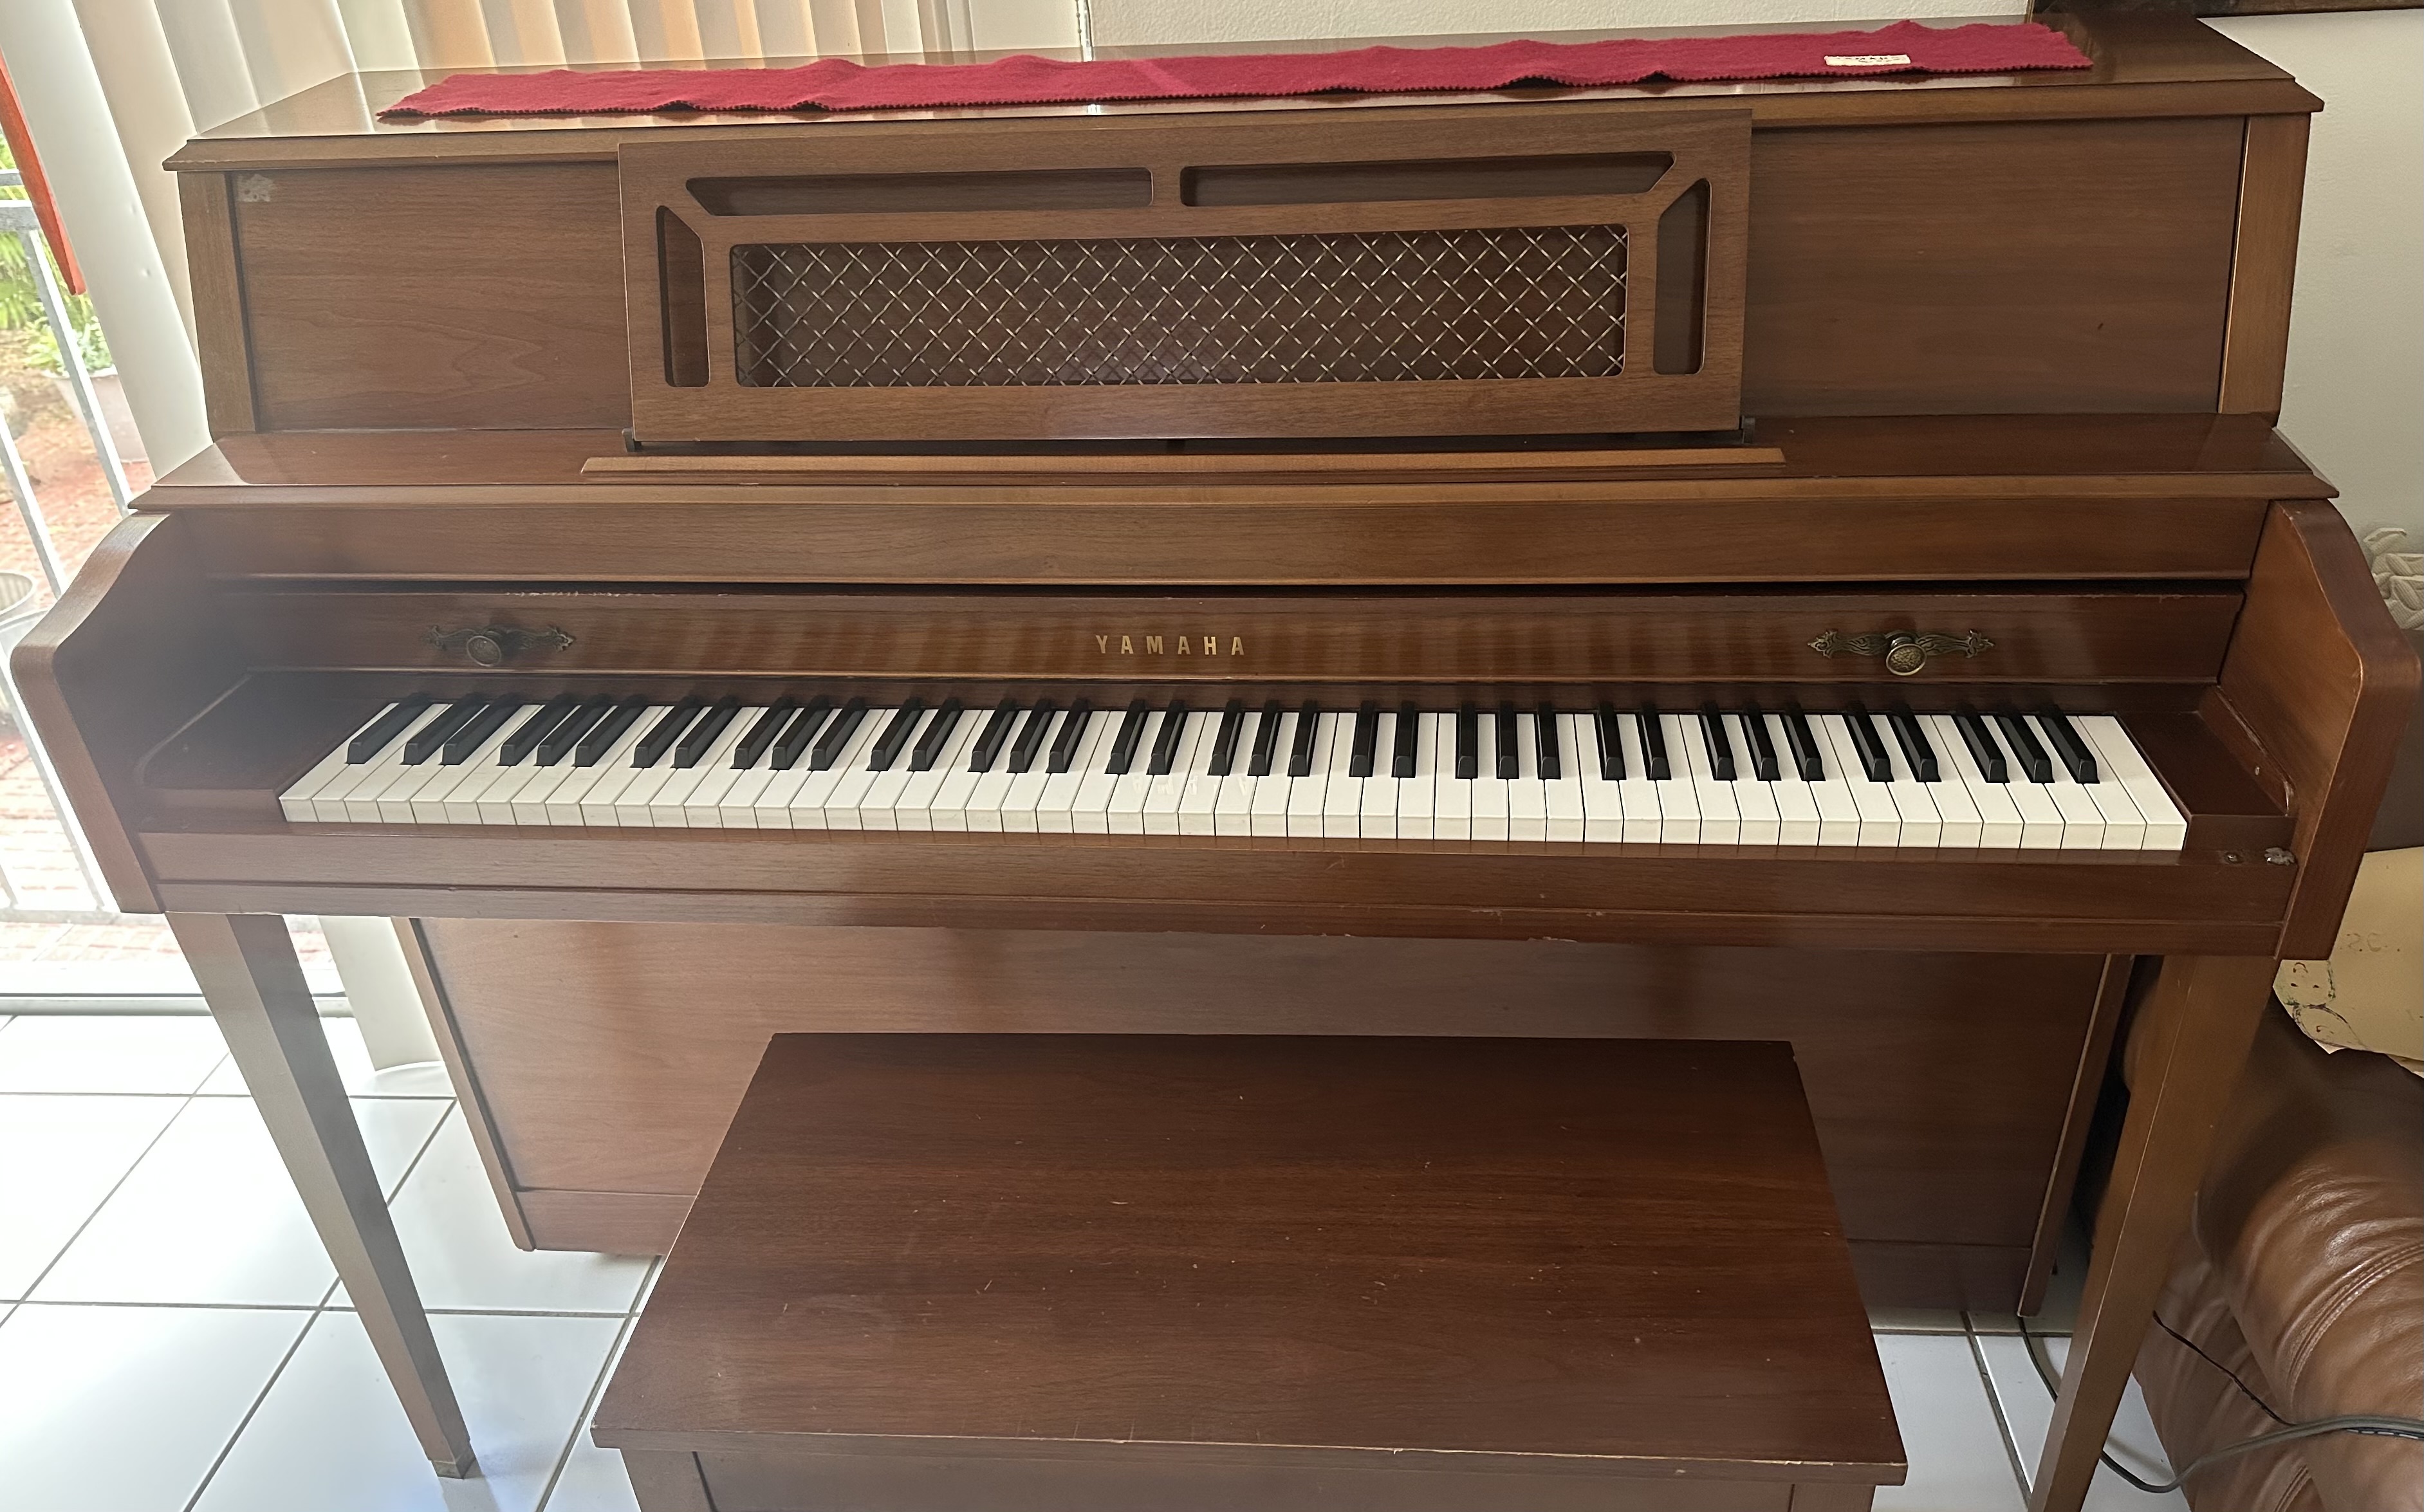 Yamaha M304 upright piano in walnut satin finish